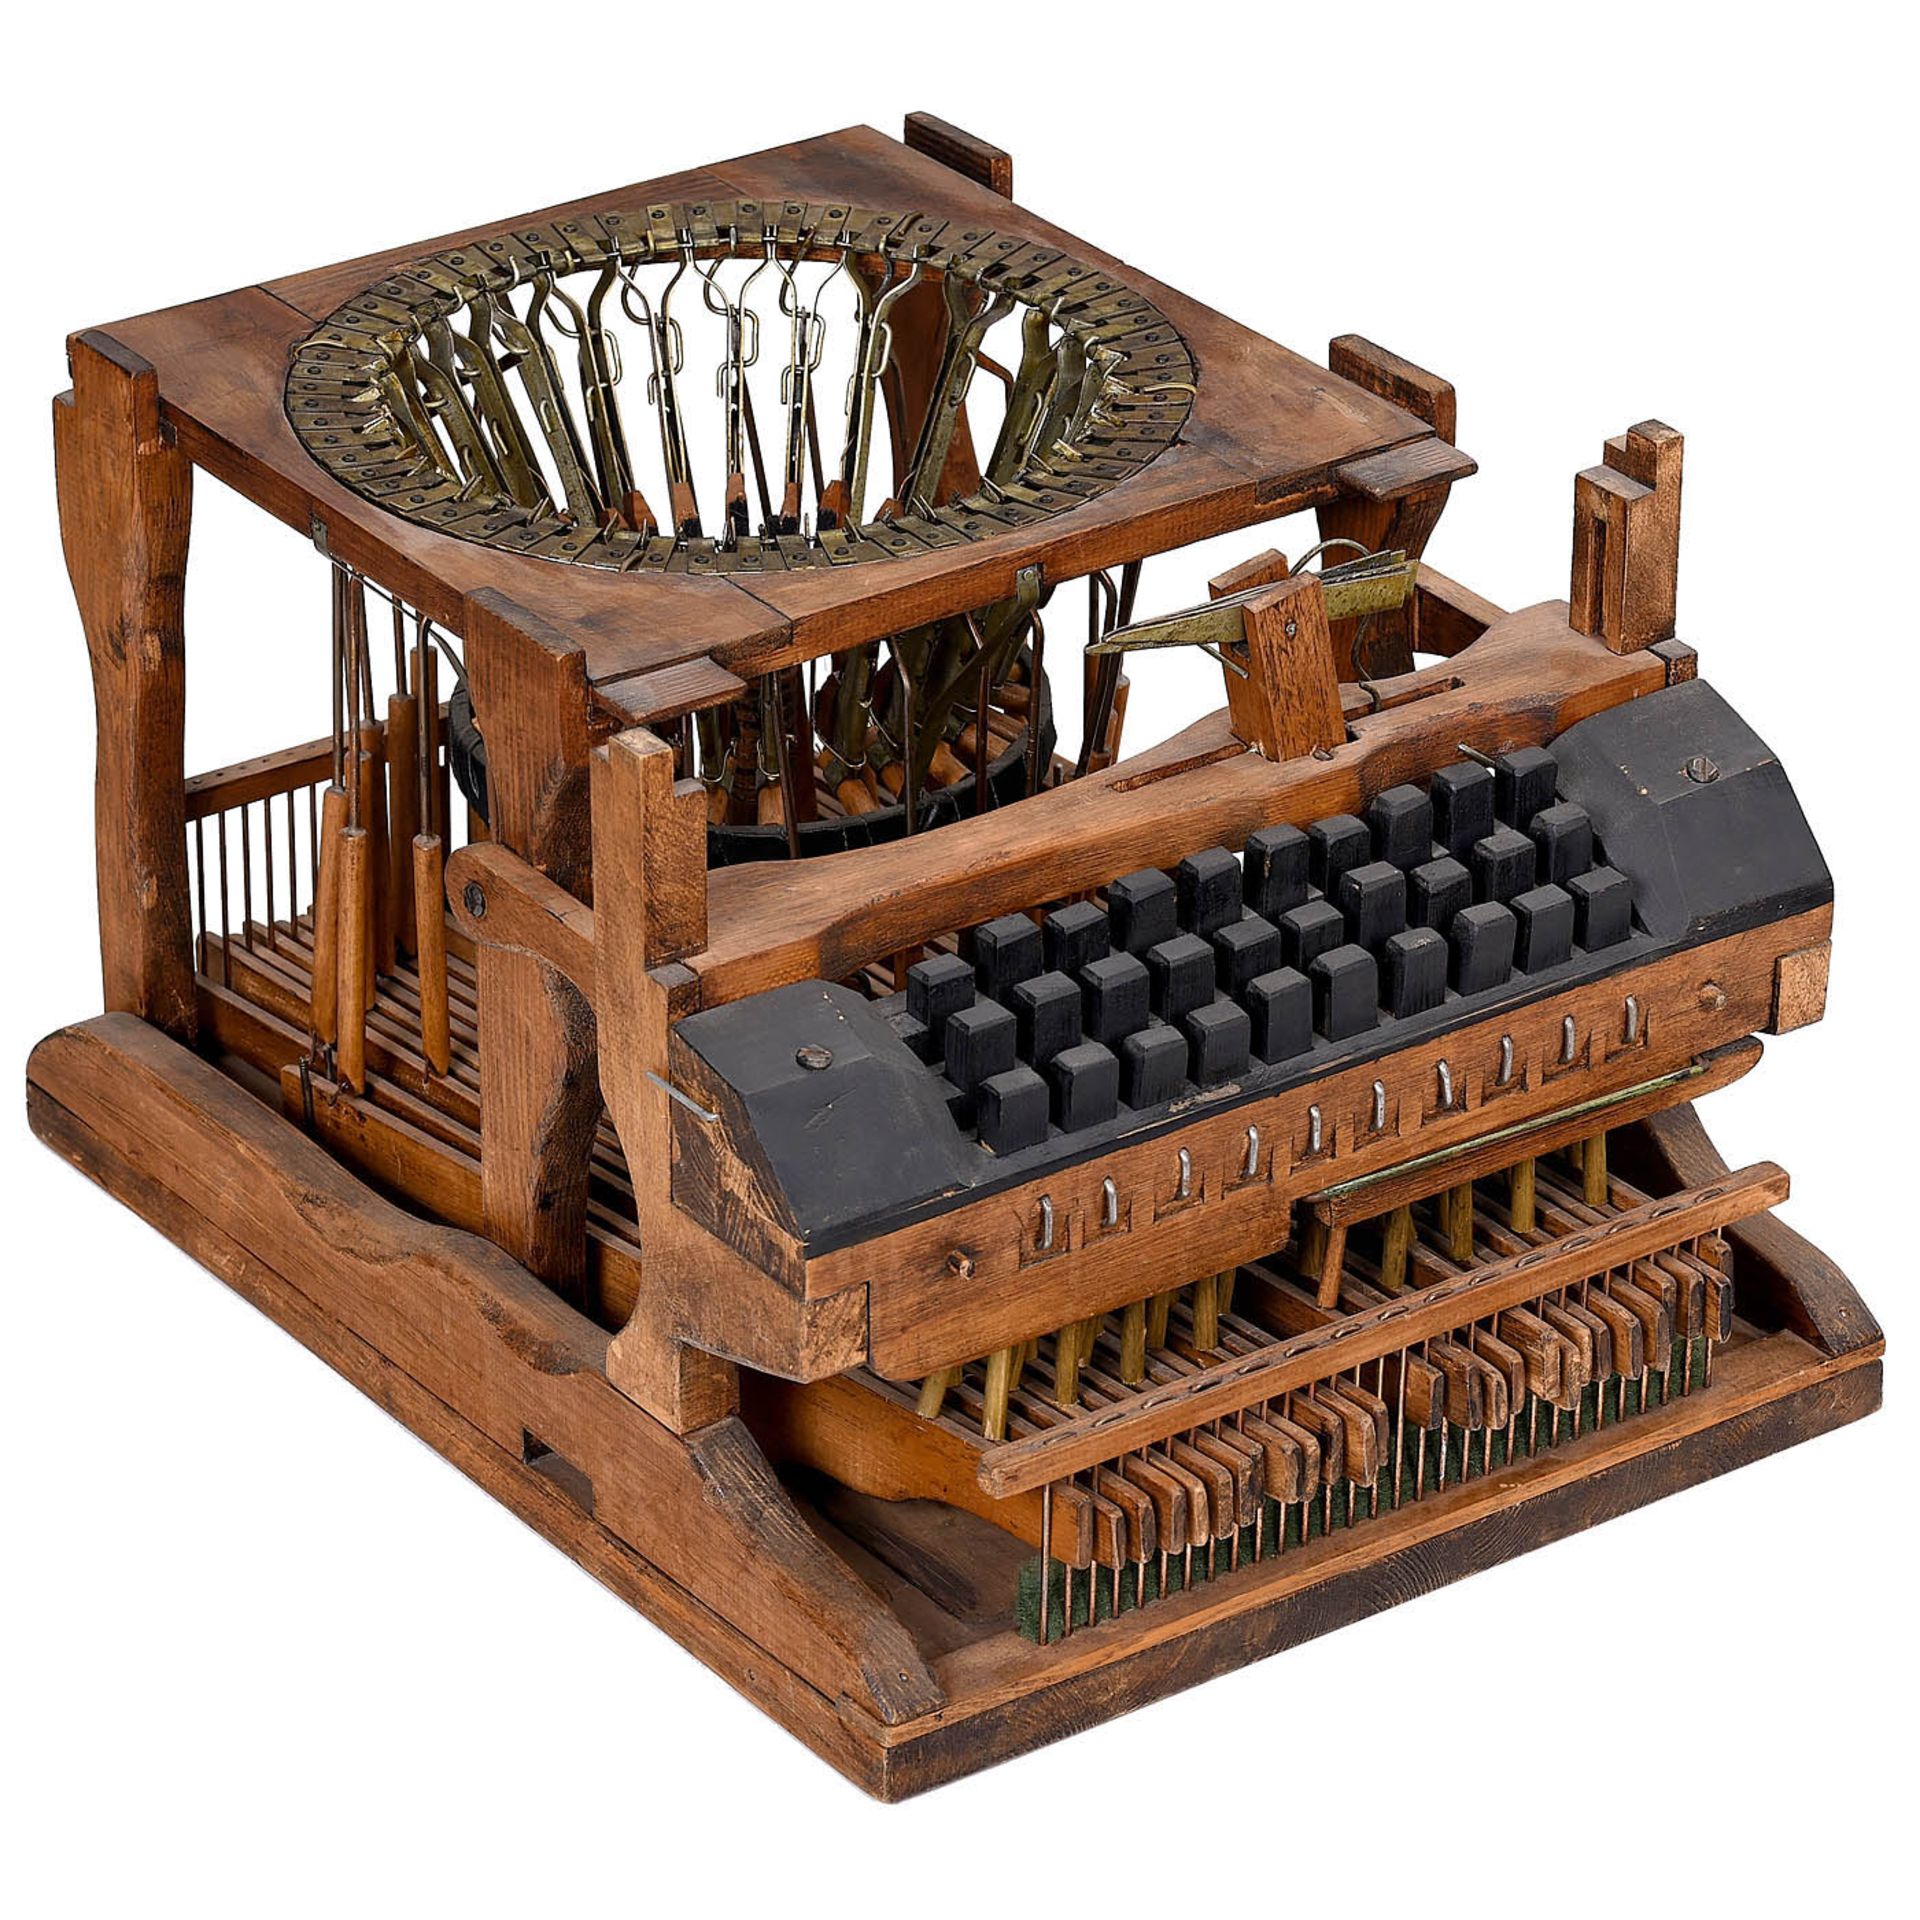 Replica of the Mitterhofer "Viennese Model" Typewriter